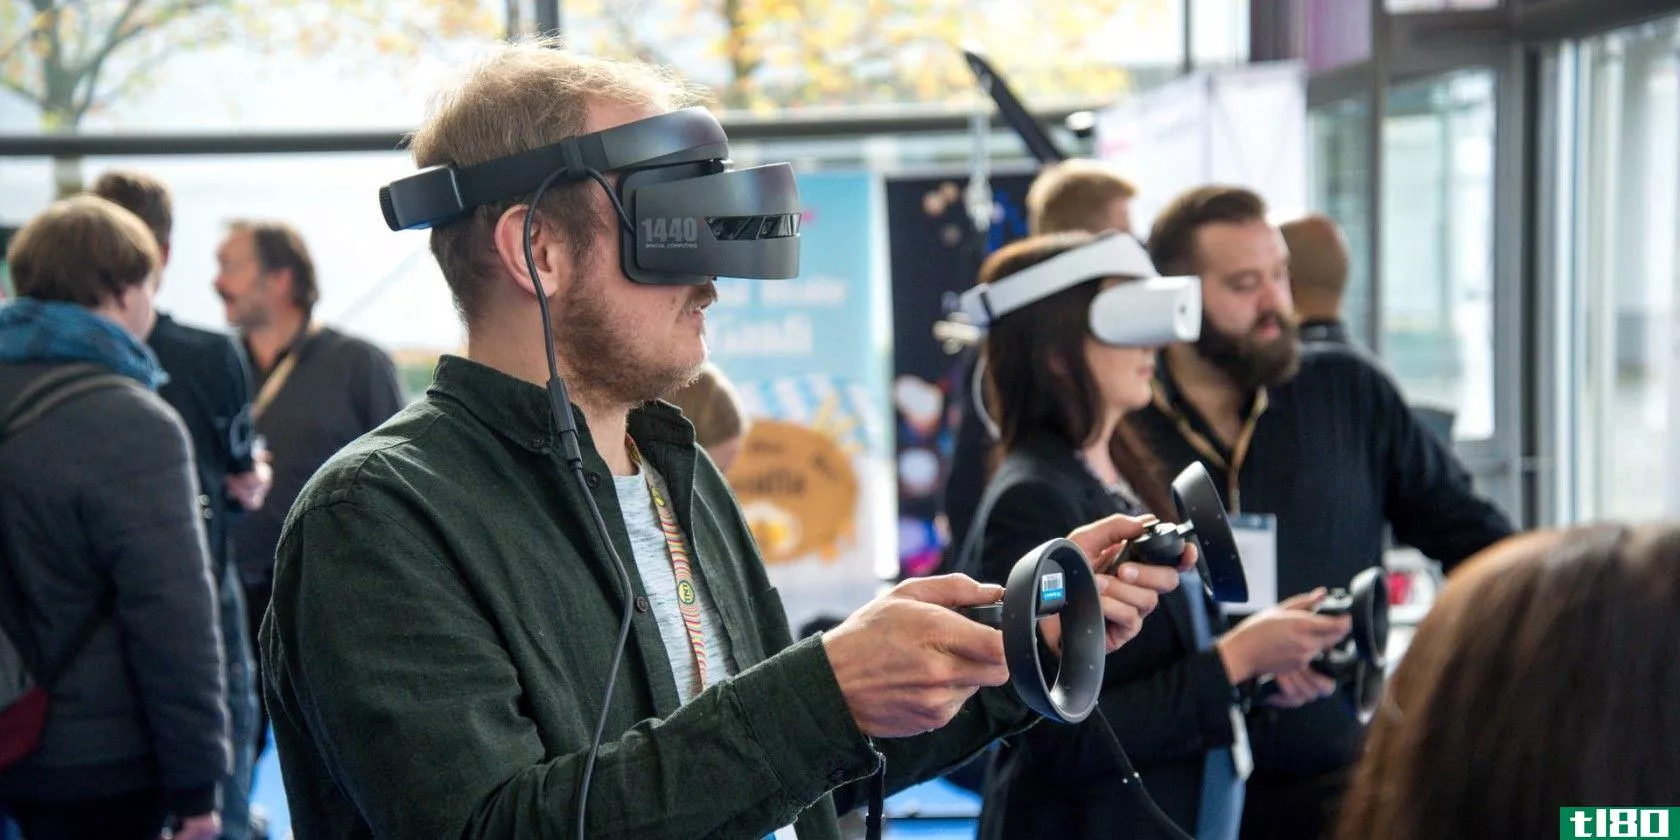 Virtual reality at convention